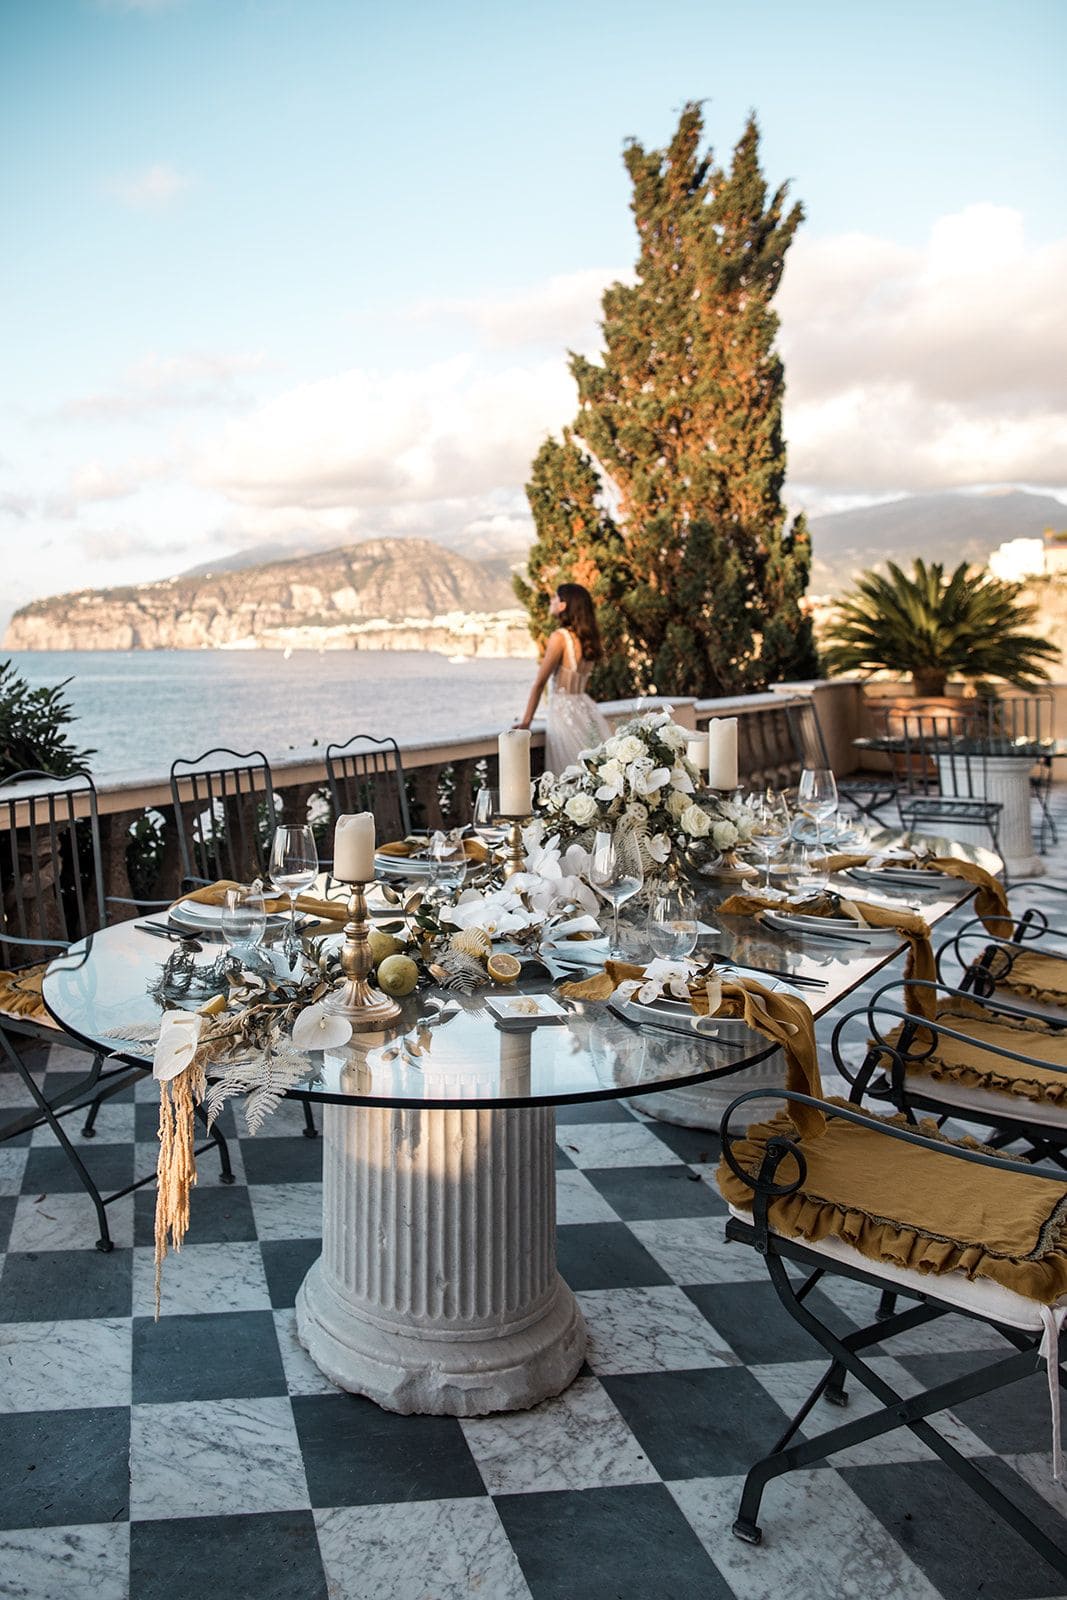 Villa Astor reception details overlooking Amalfi Coast